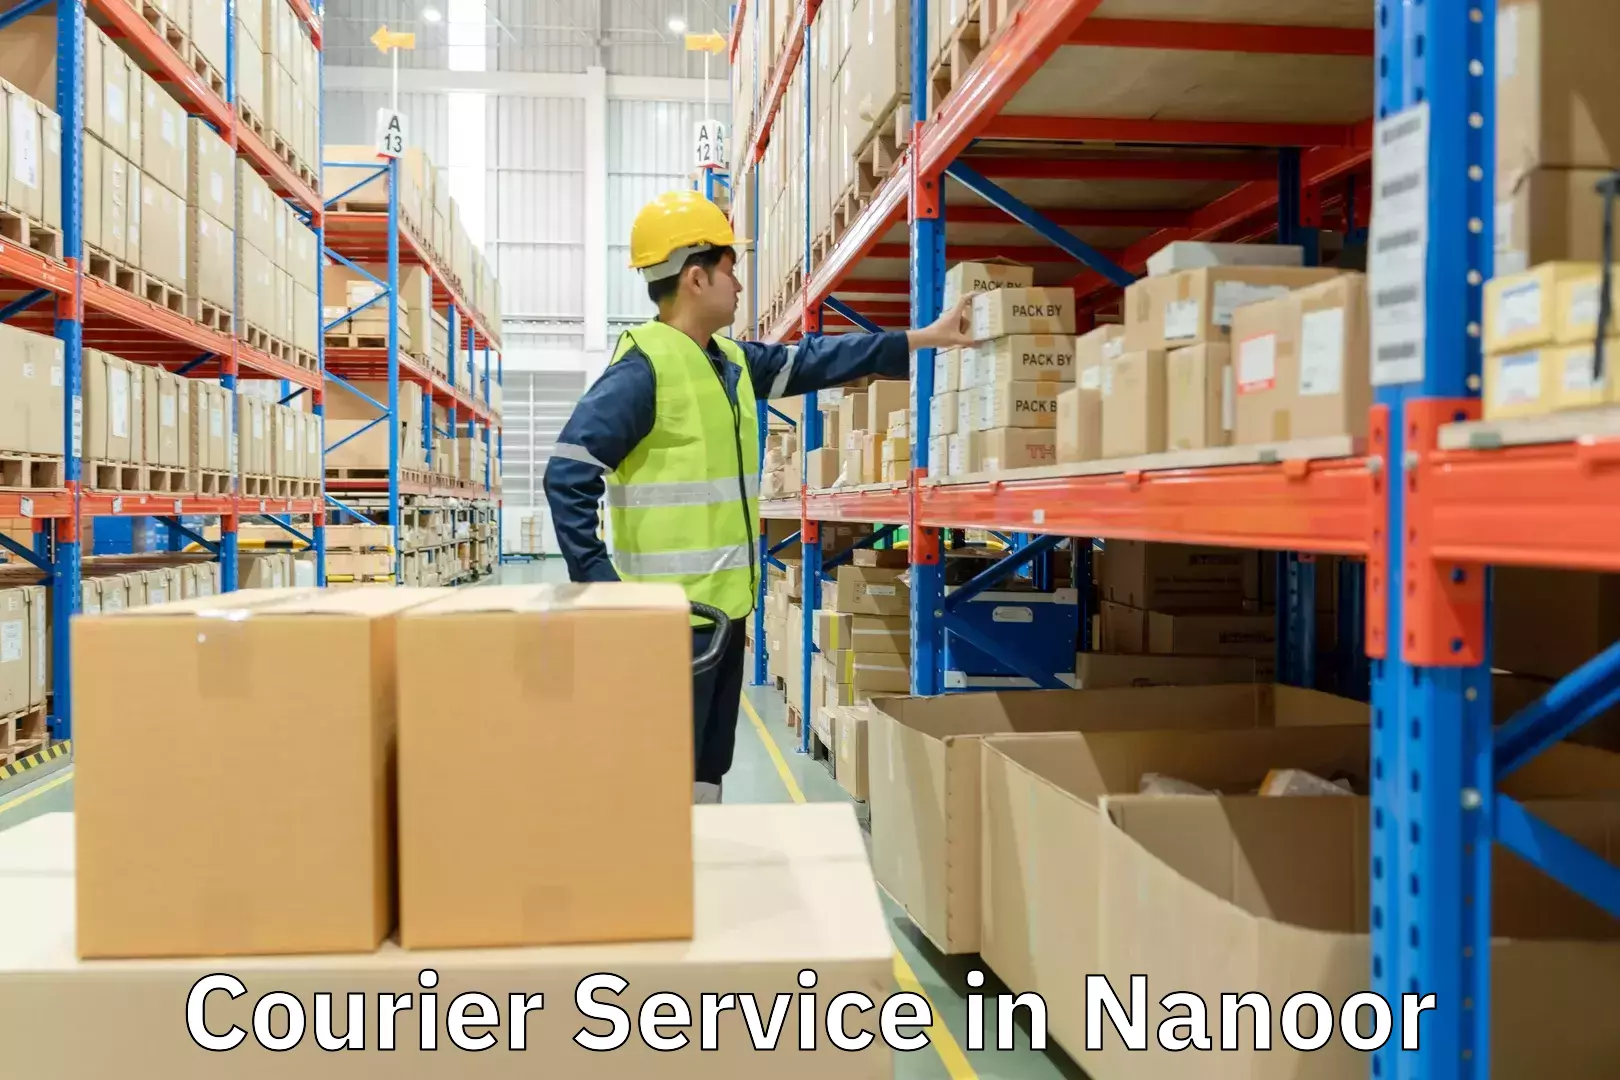 Advanced logistics management in Nanoor